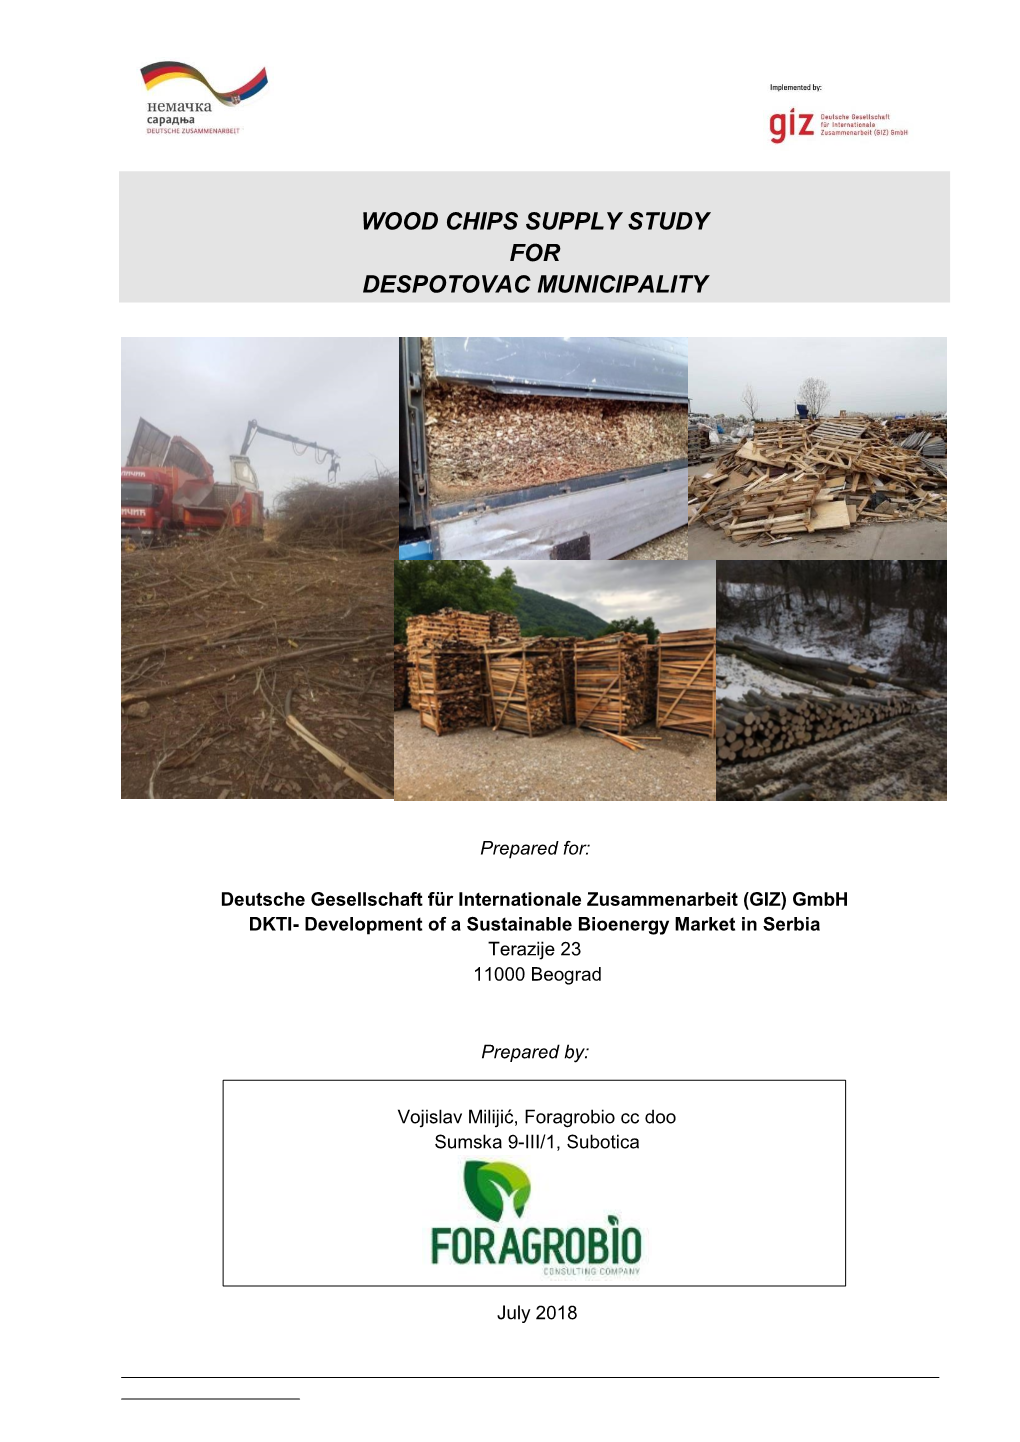 Wood Chips Supply Study for Despotovac Municipality, 2018